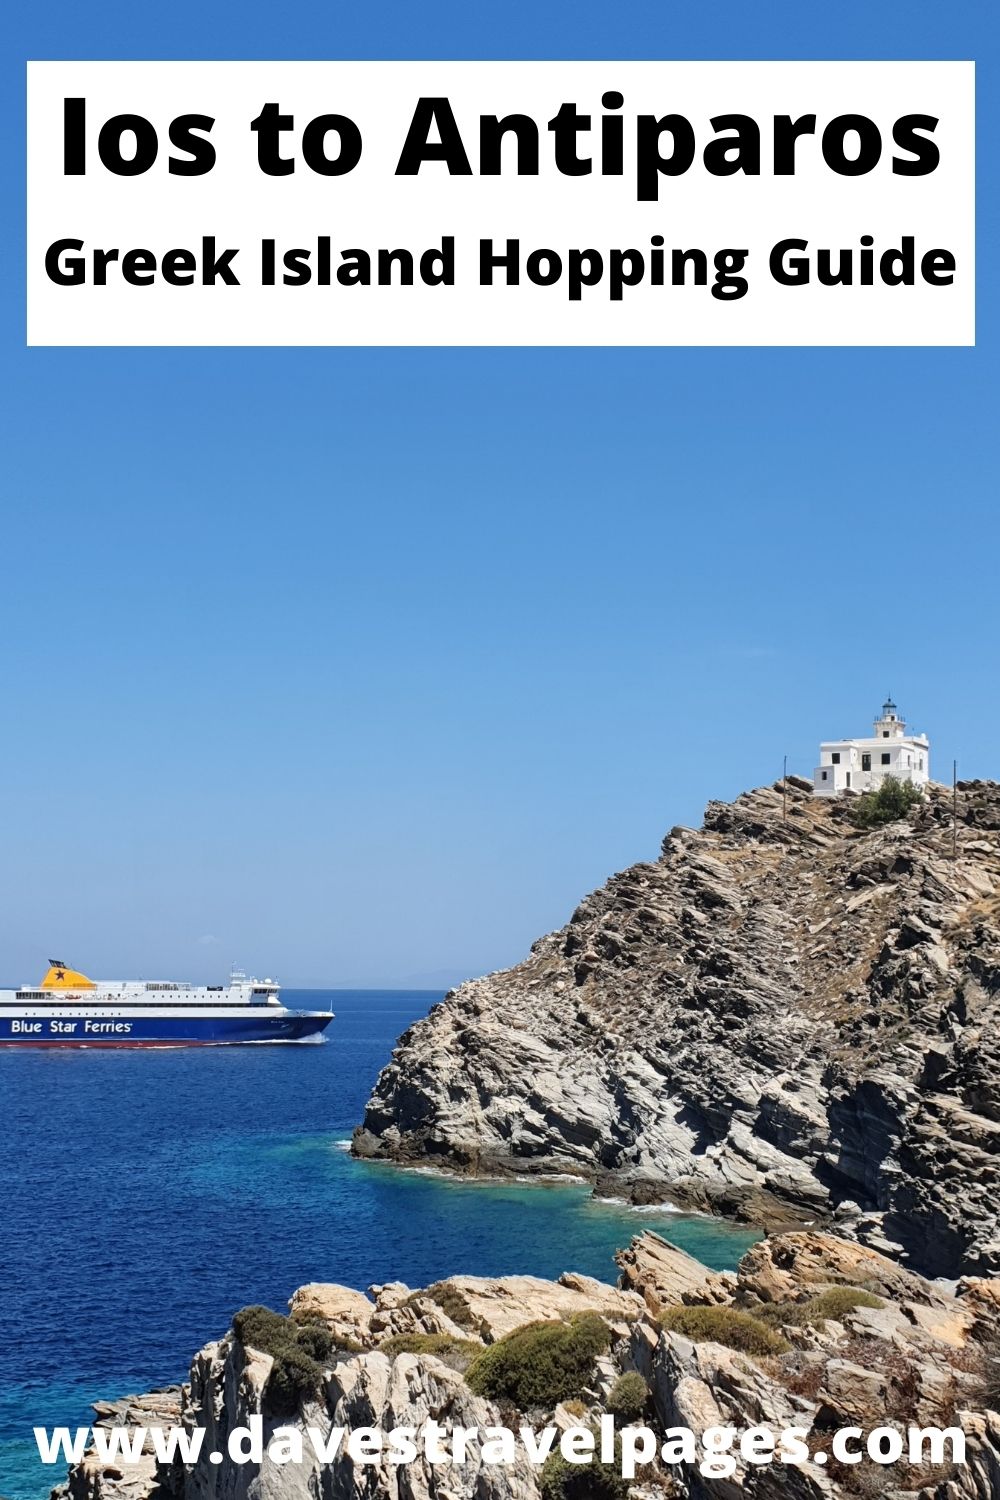 Ios to Antiparos Greek Island Hopping Guide by Destination Expert Dave Briggs